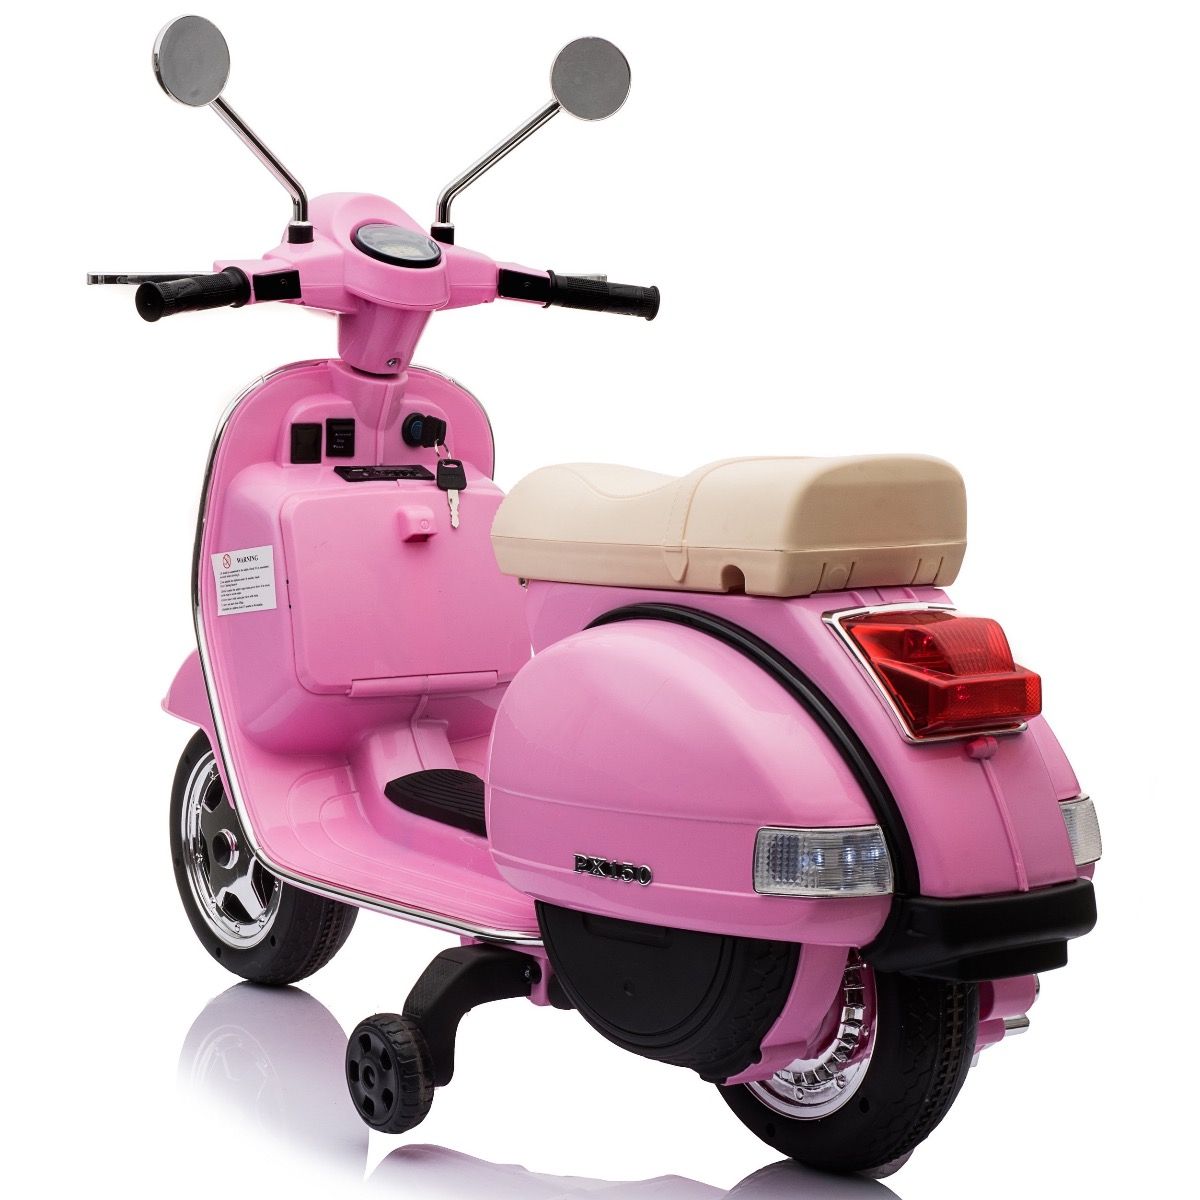 Vespa 12v scooter/ Vespa Toy scooter for kids-Best Ride on Cars-Stroll Zone